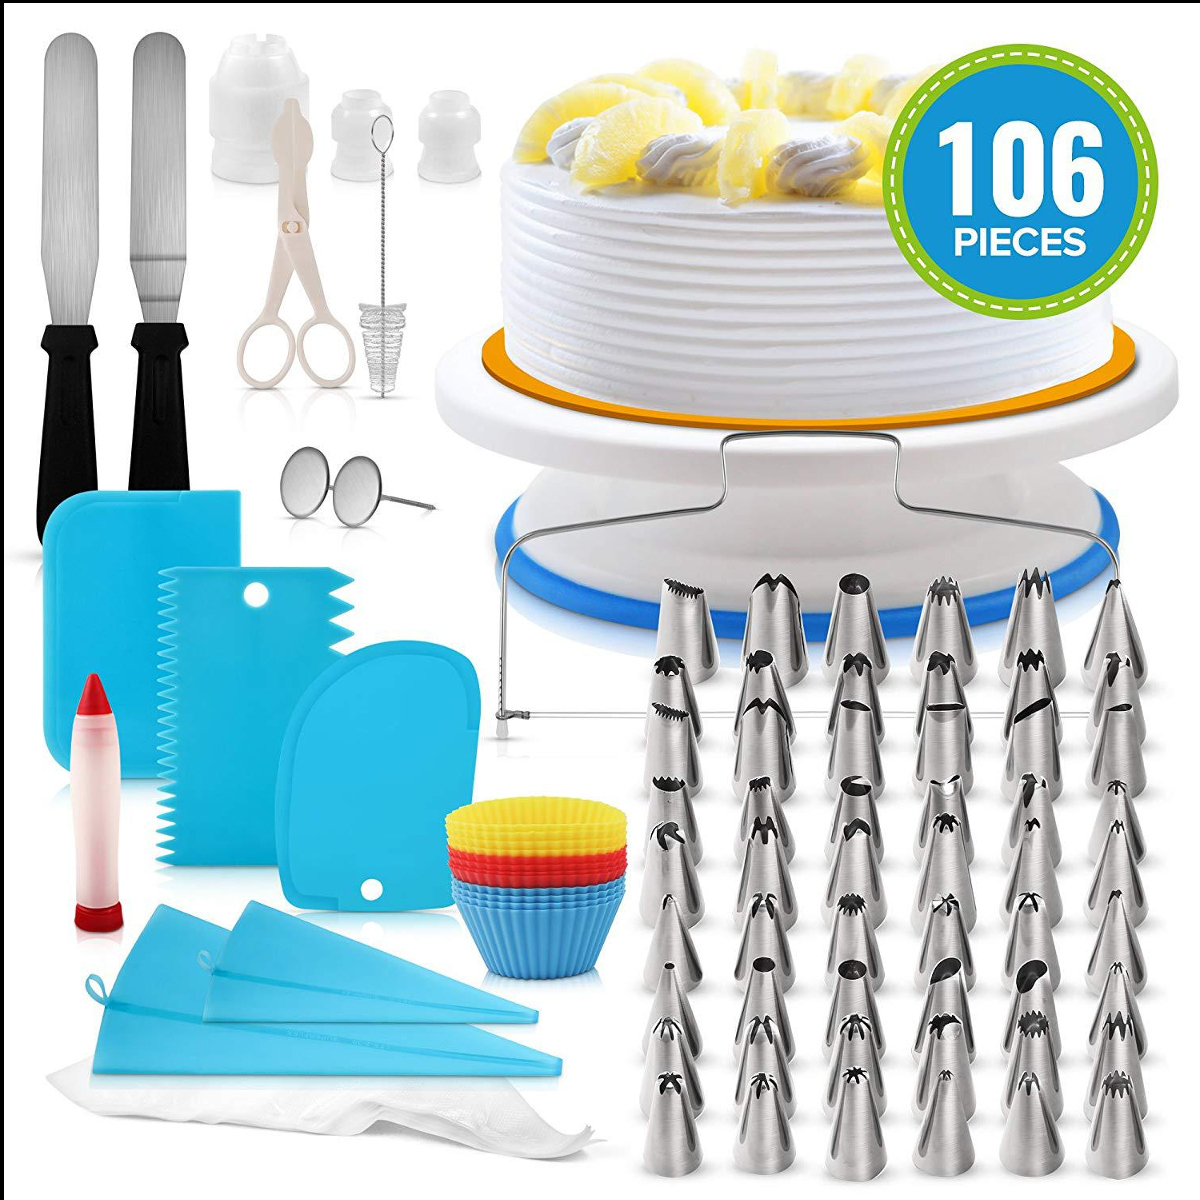 106Pcs-28cm-Cake-Turntable-Rotating-Decorating-Flower-Icing-Piping-Nozzles-Baking-Mold-Set-1382857